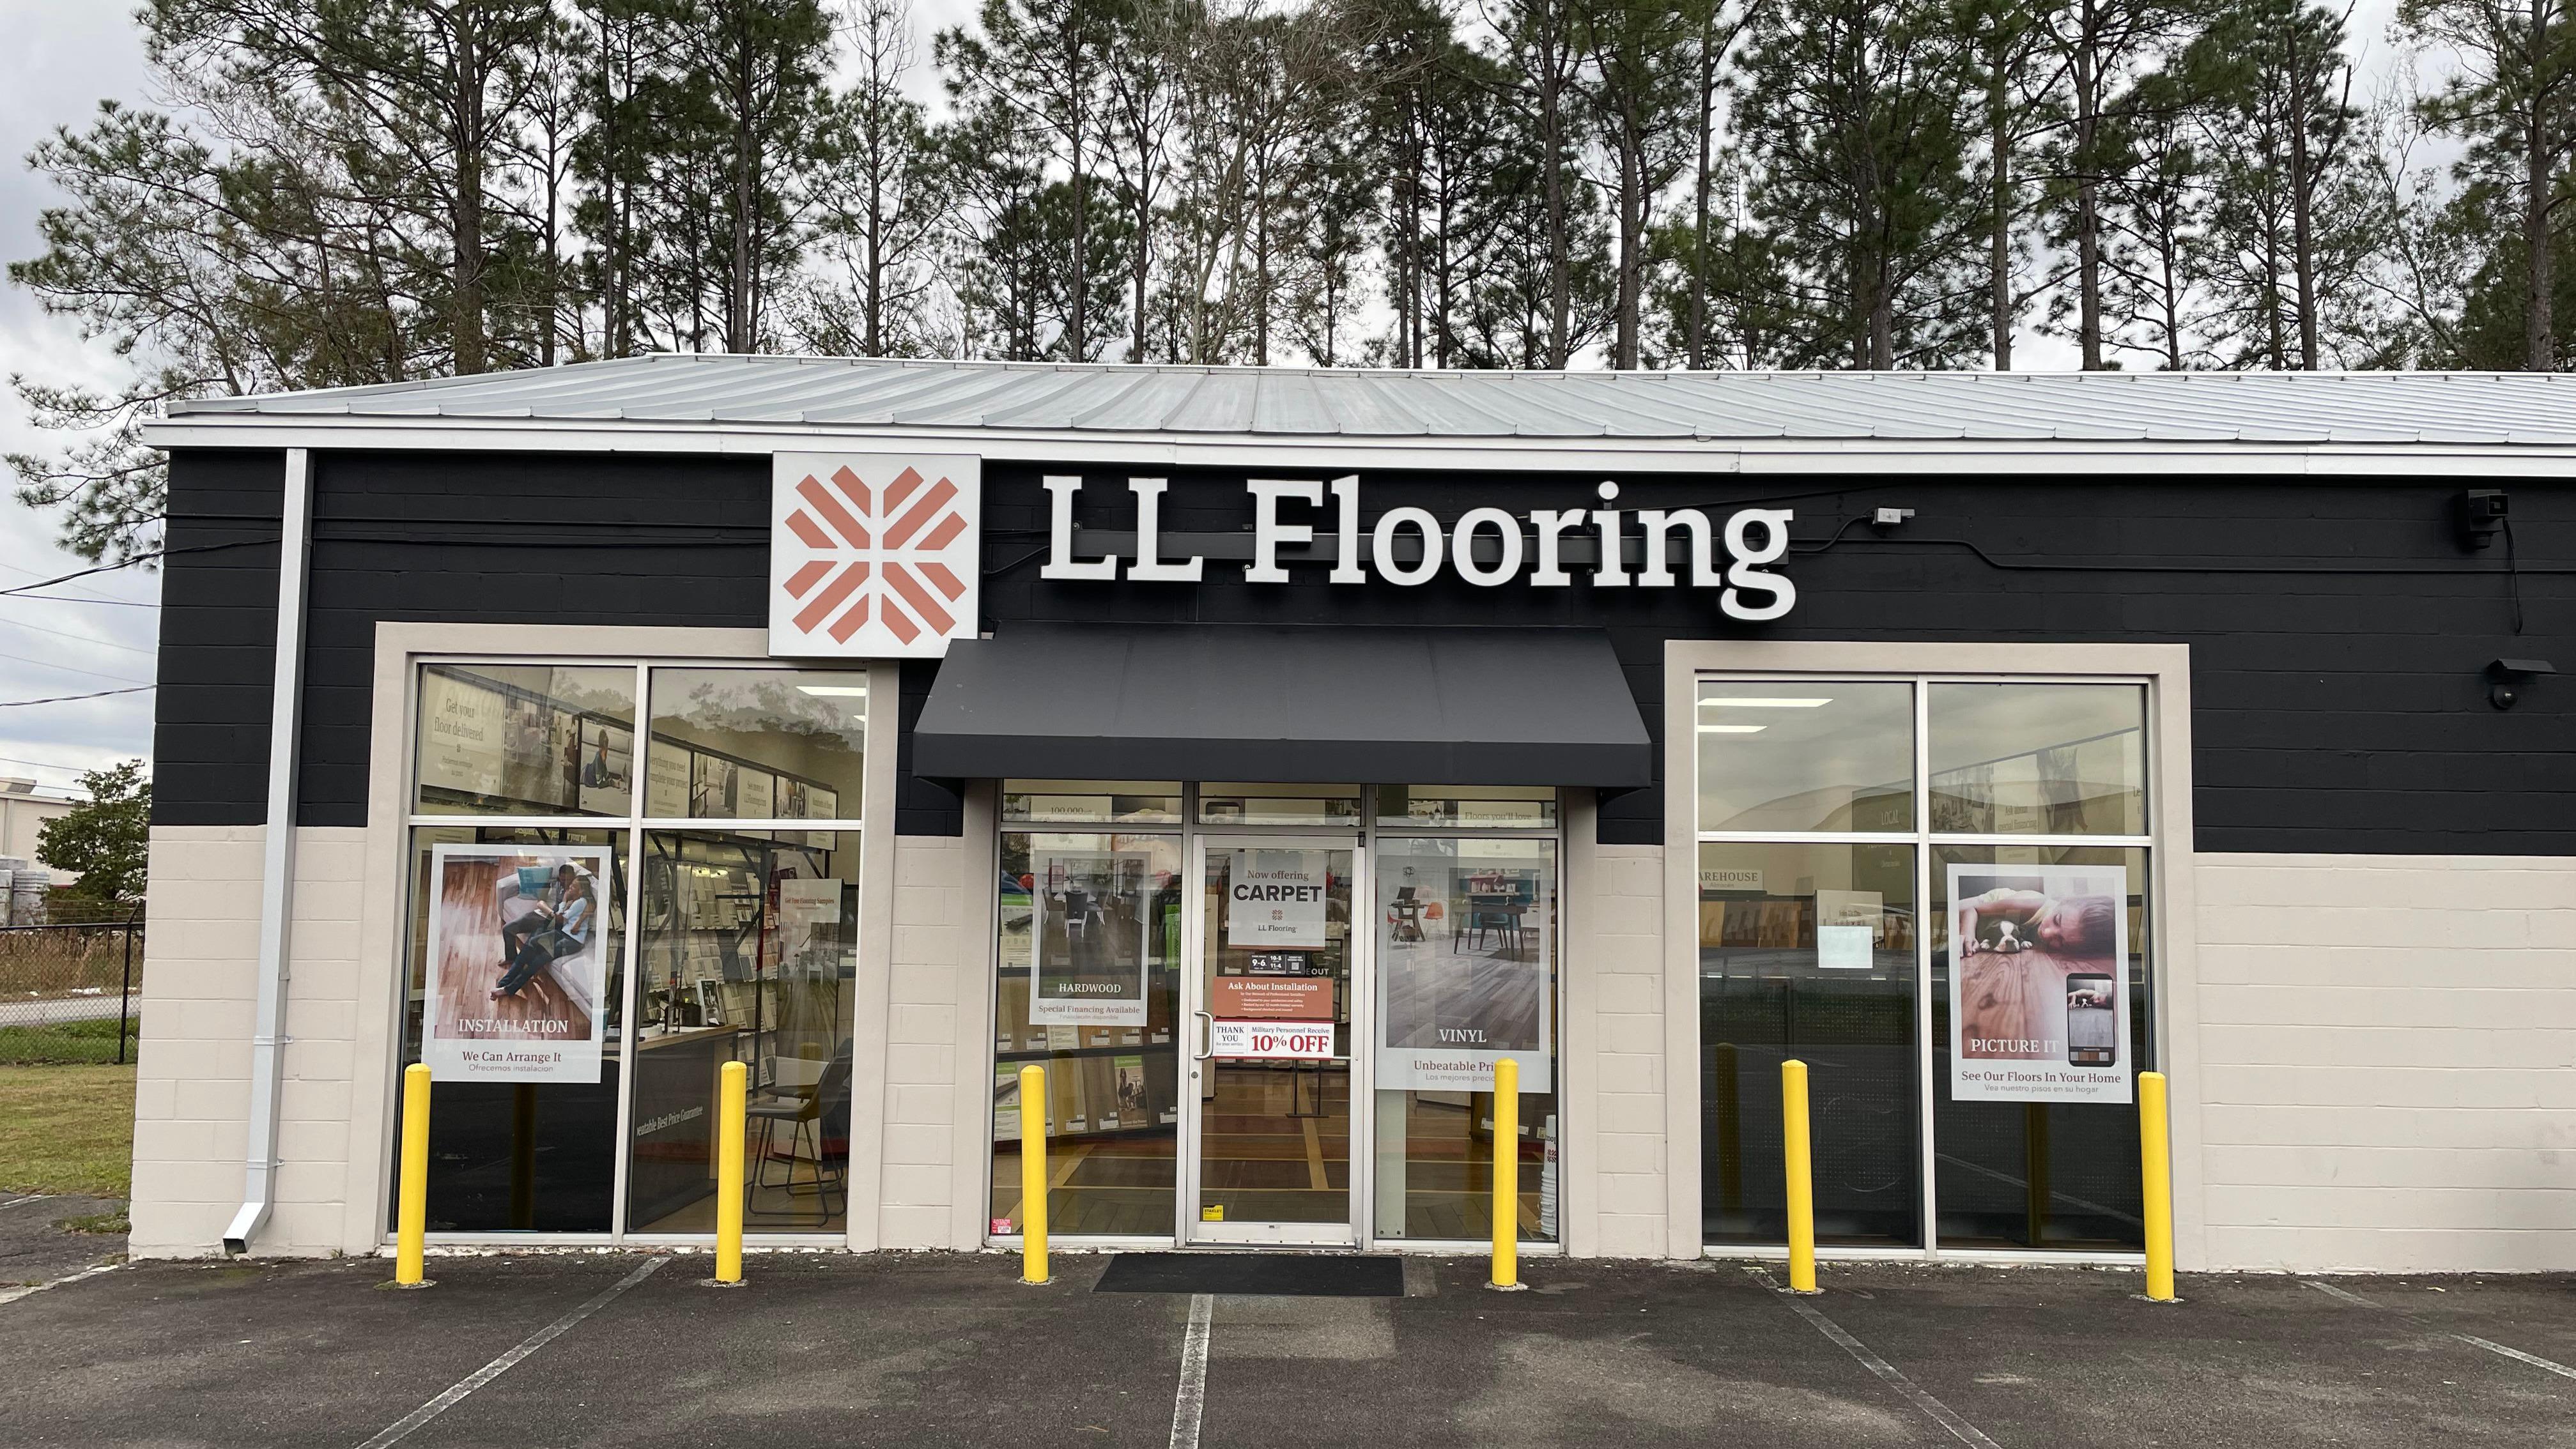 LL Flooring #1037 West Jacksonville | 624 Beautyrest Avenue | Storefront LL Flooring Jacksonville (904)783-6446